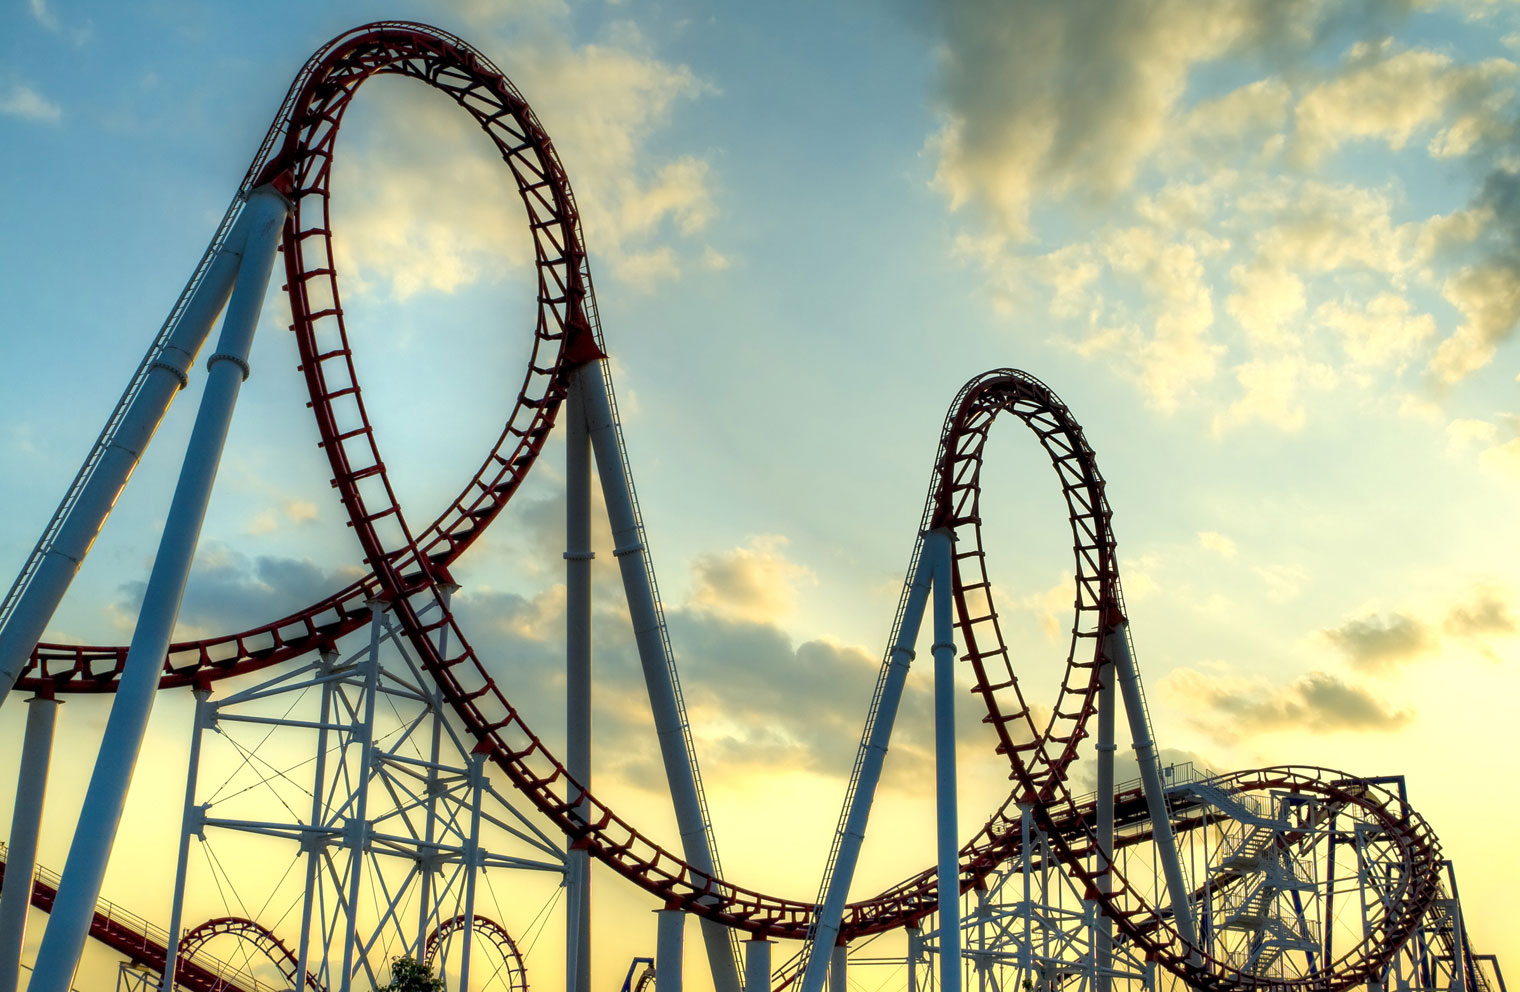 Image of looping roller coaster.